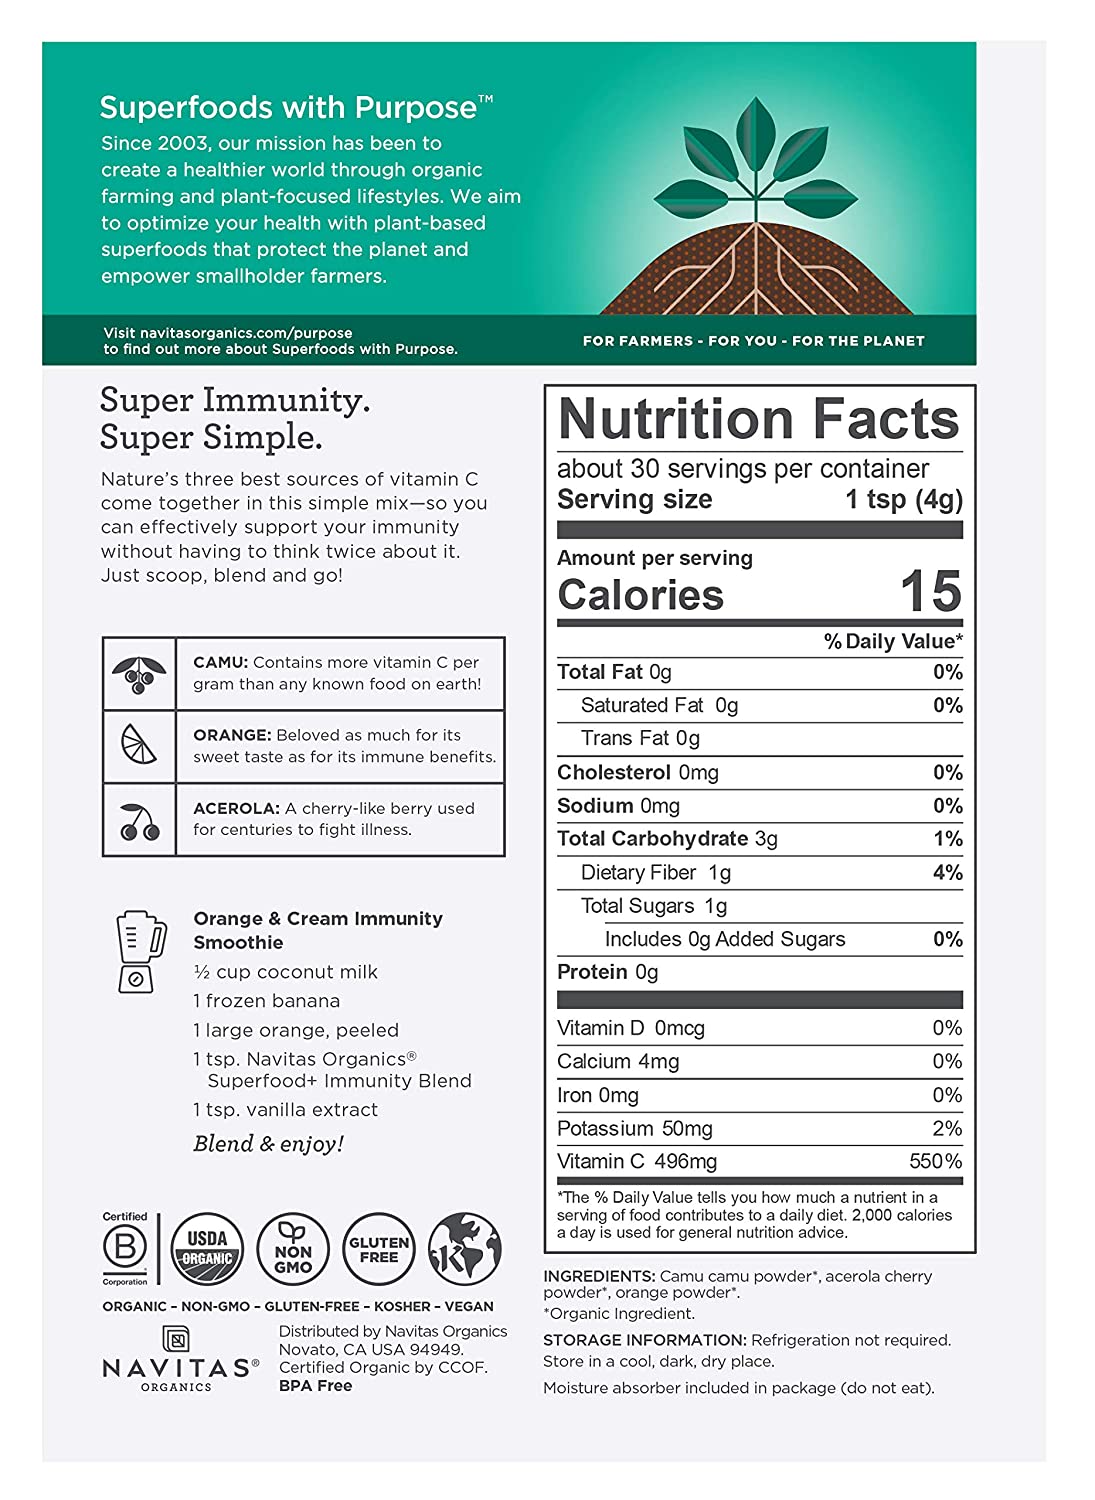 Navitas Organics Organic Superfood Immunity Blend - 120 g-1